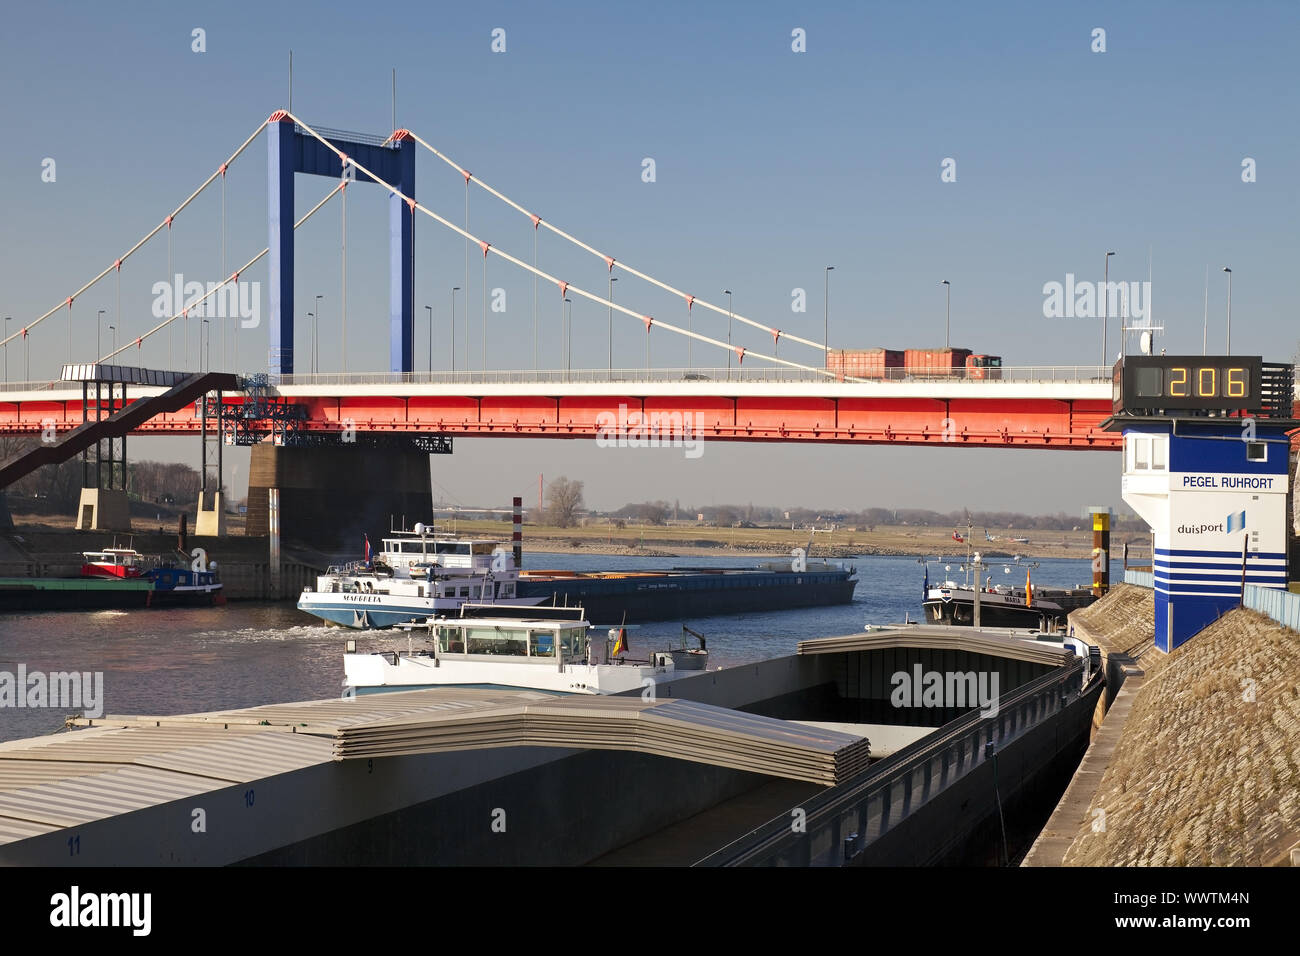 brigde Friedrich-Ebert-Bruecke over thr river Rhine, Duisburg, Ruhr Area, Germany, Europe Stock Photo